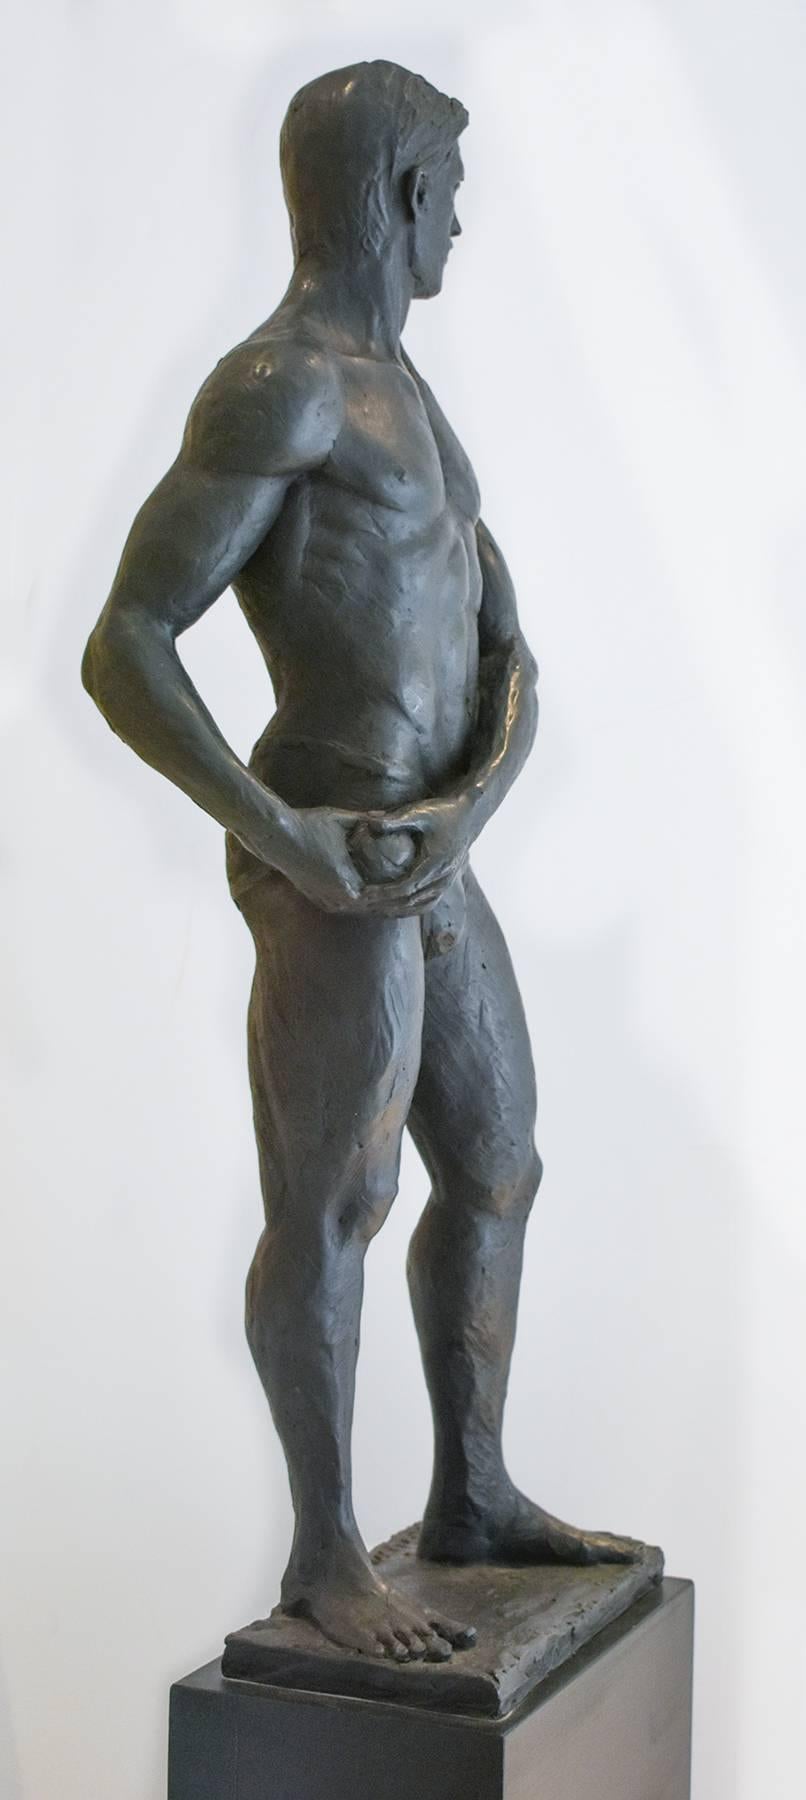 Statue of Athlete, Study: Academic Bronze Figurative Sculpture of Nude Male 2